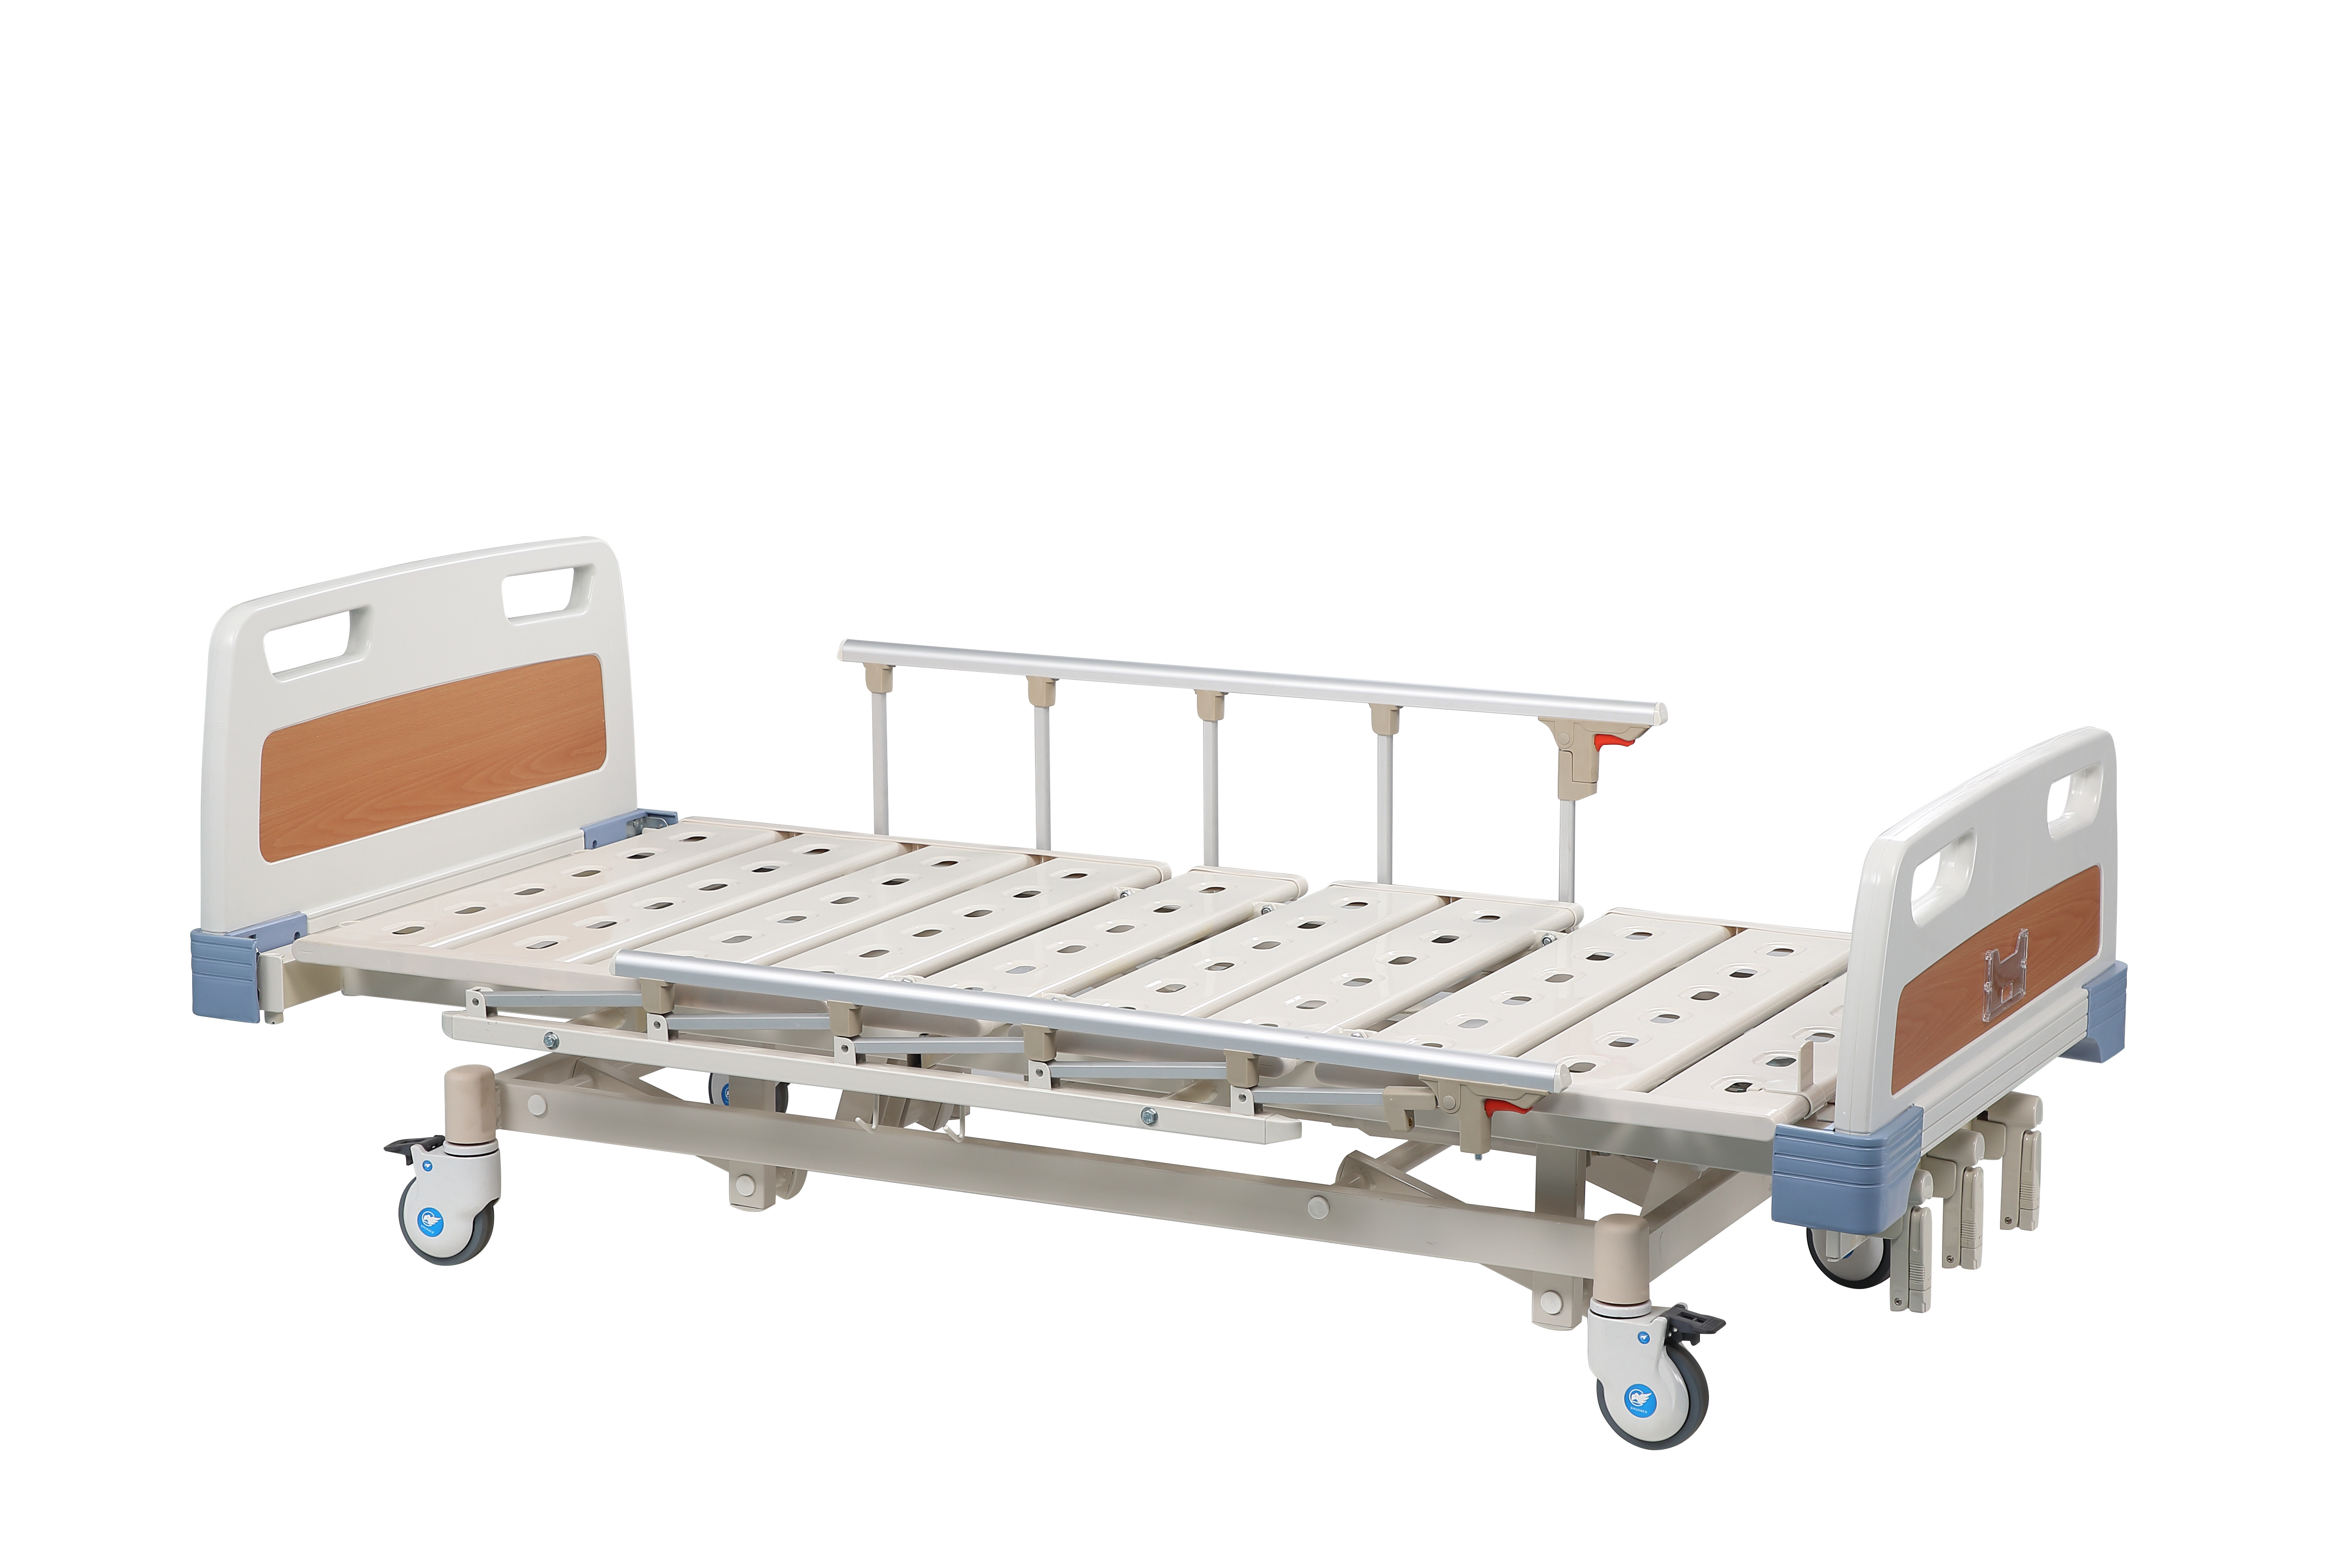  Folding Adjustable Medical Manual Hospital Bed Metal For Patient Manufactures